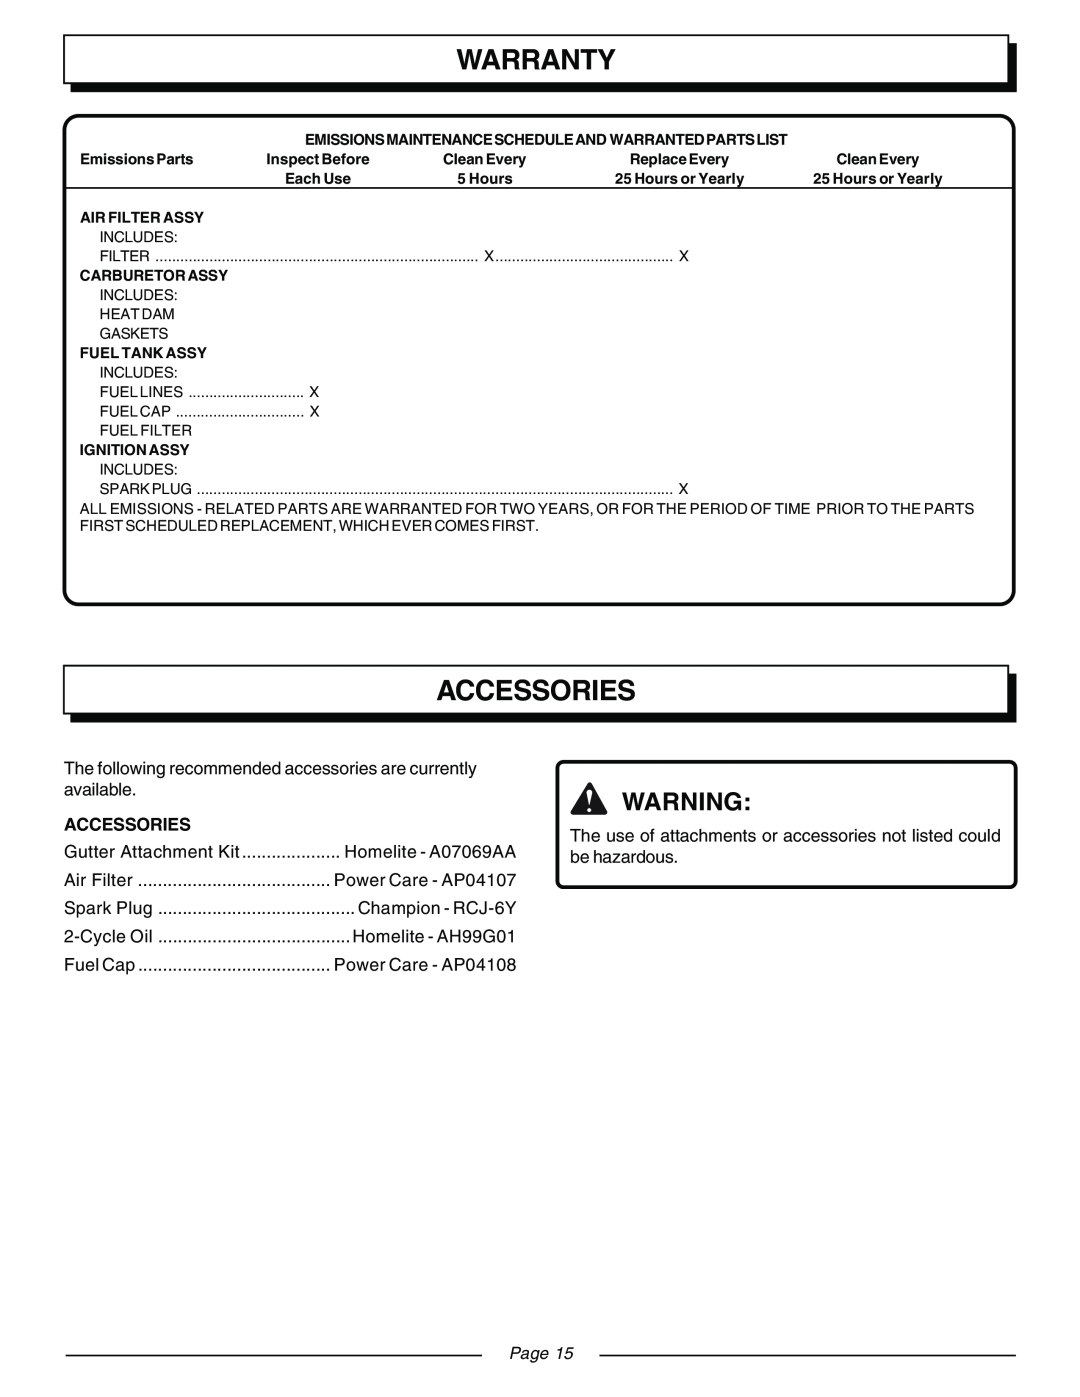 Homelite UT08511 Accessories, Warranty, Page, Homelite - A07069AA, Emissionsmaintenancescheduleand Warrantedpartslist 